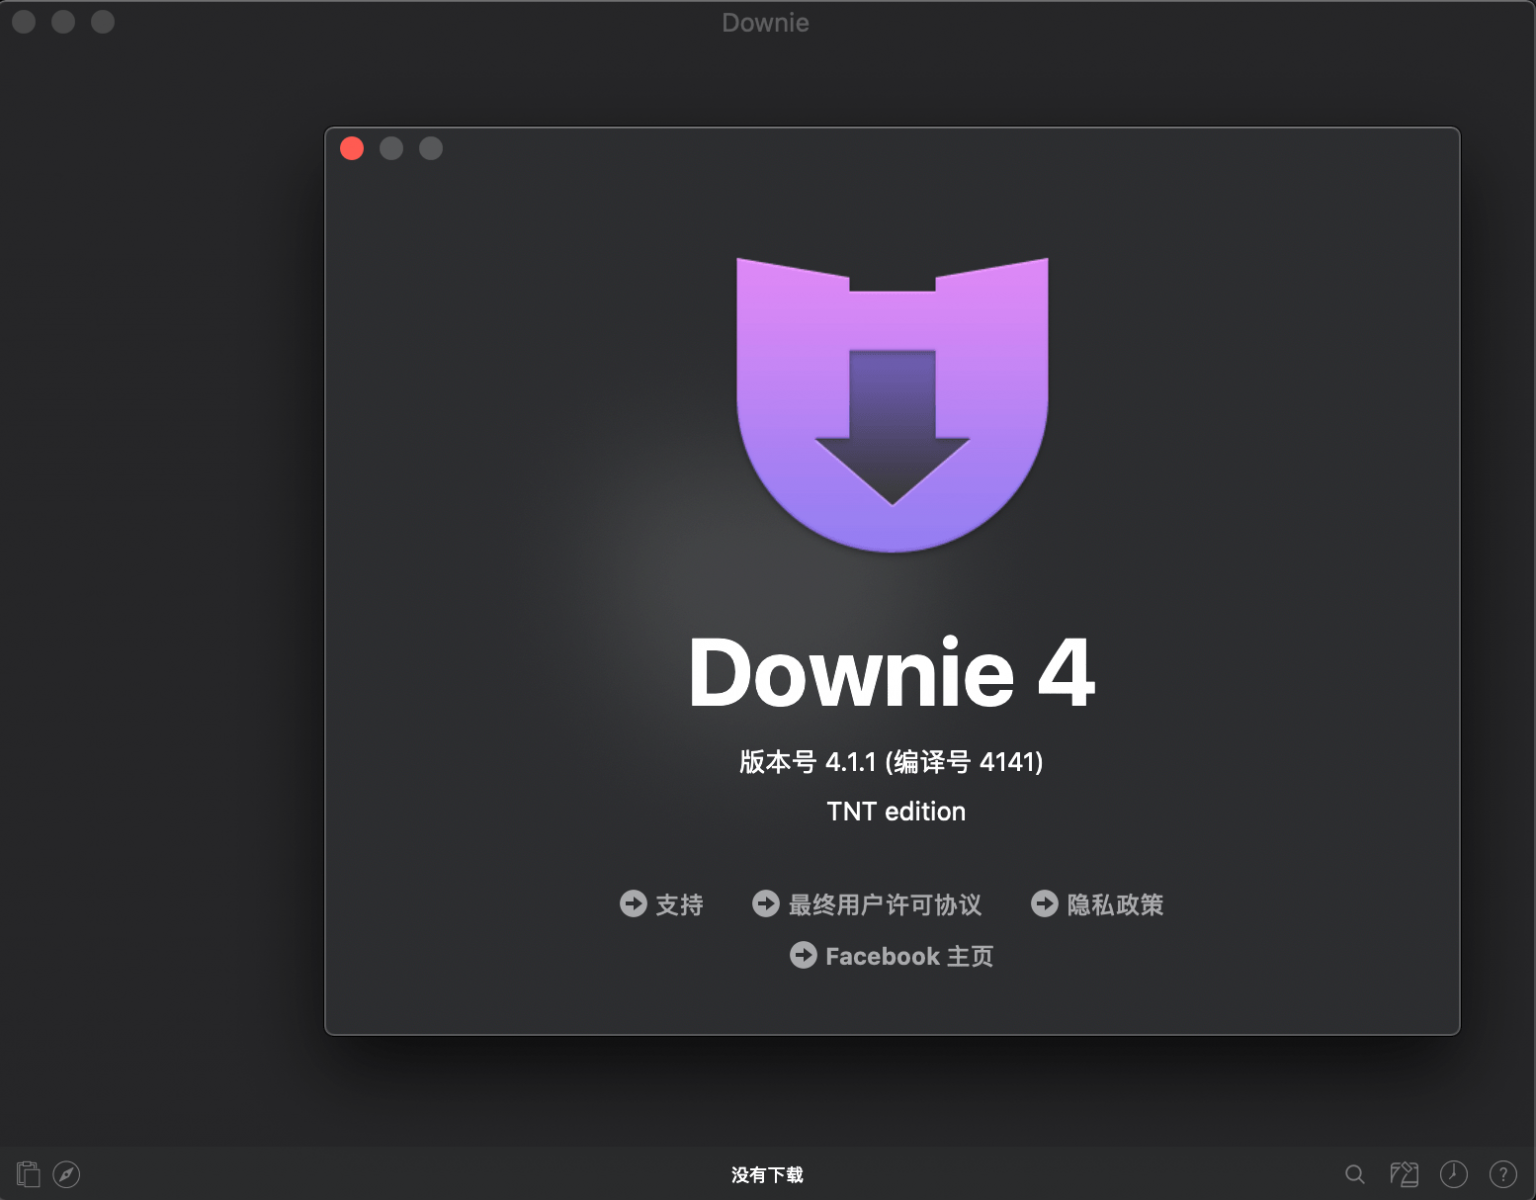 Downie 4 download